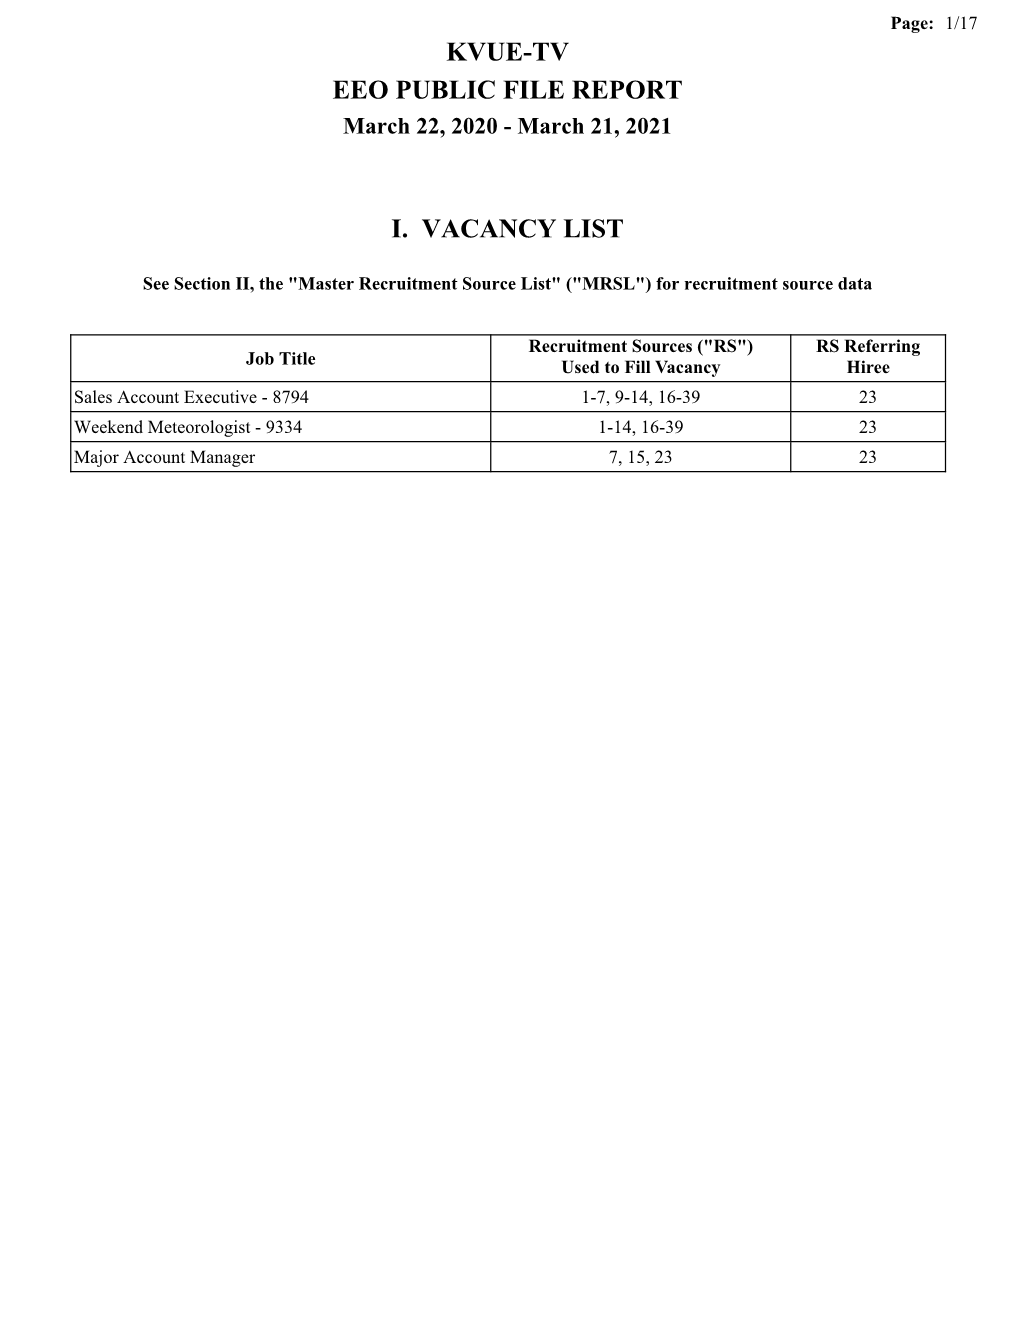 Kvue-Tv Eeo Public File Report I. Vacancy List